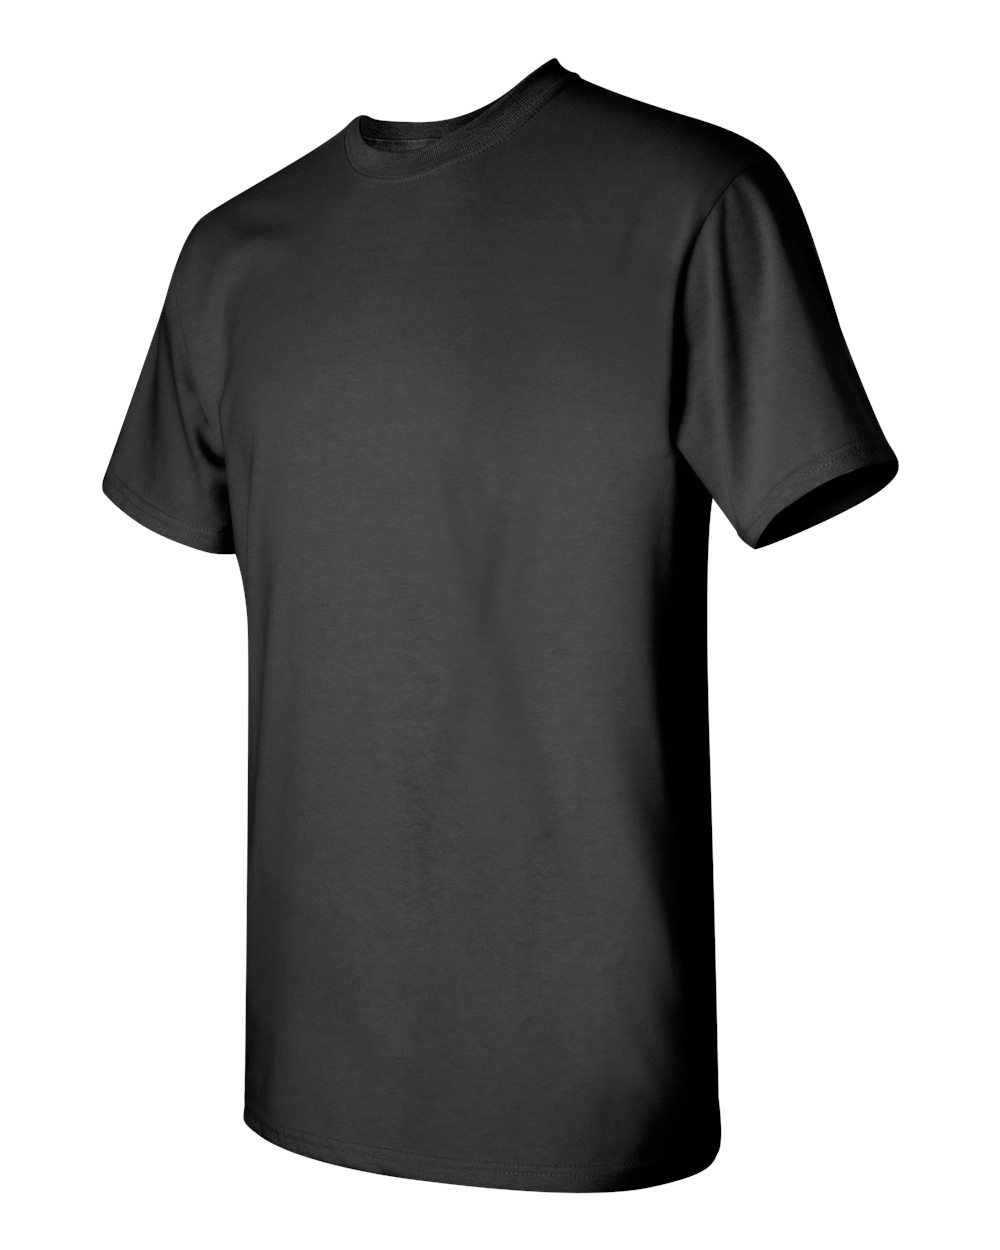 Men's T-Shirt Short Sleeve - Dallas - image 3 of 5